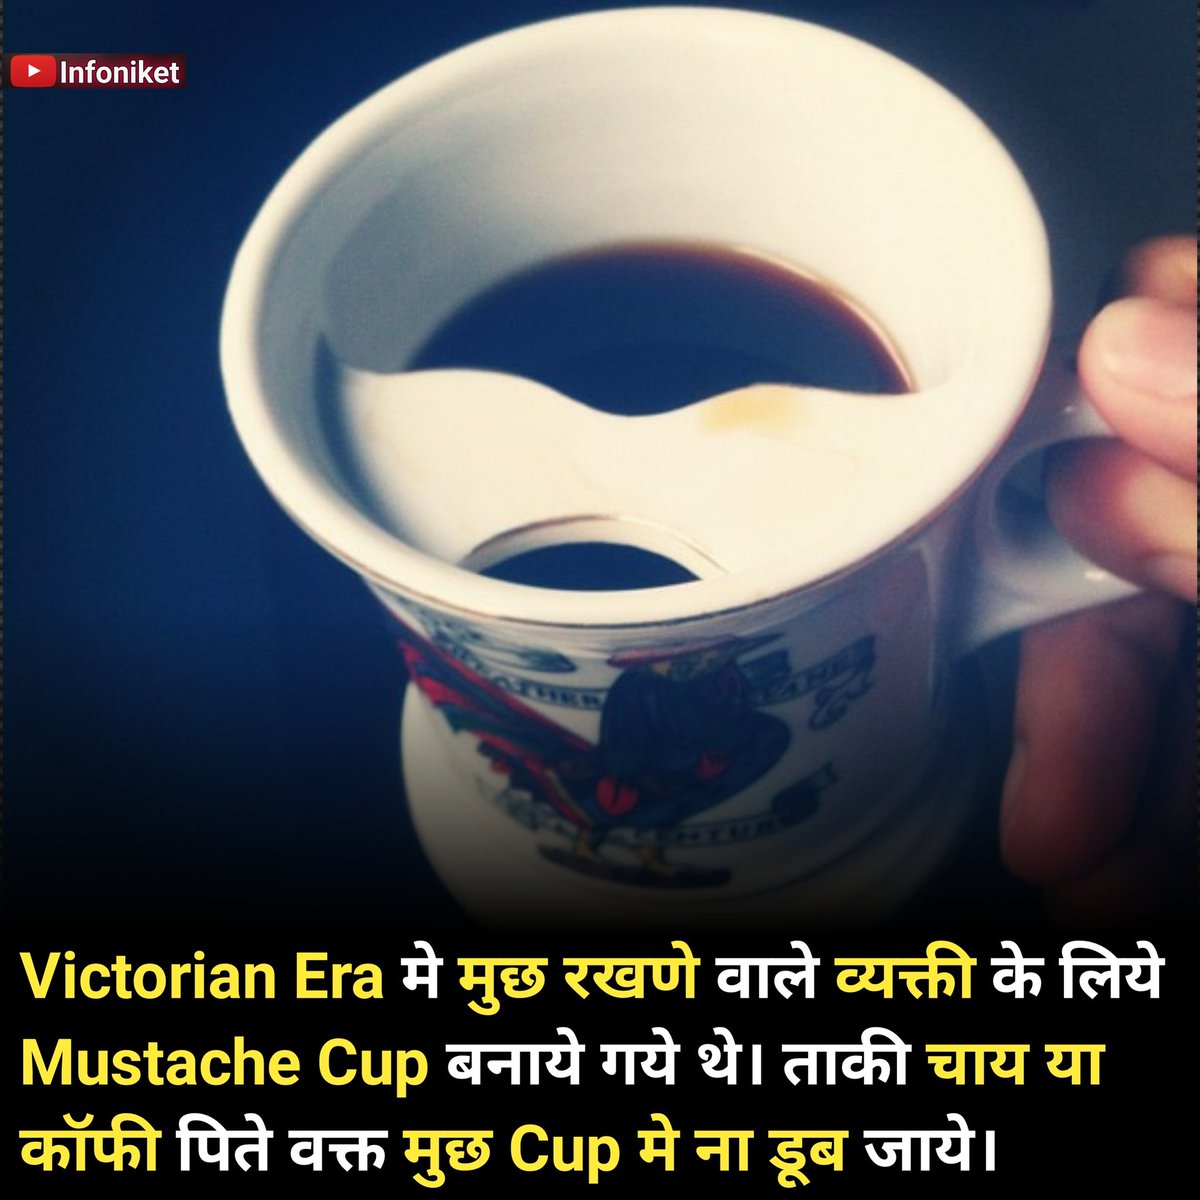 क्या आपको पता है? 🤔🤔

#facts #factsinhindi #hindifacts #infoniket #information #amazingfacts #knowledge #viralfacts #newfacts #mustachecup